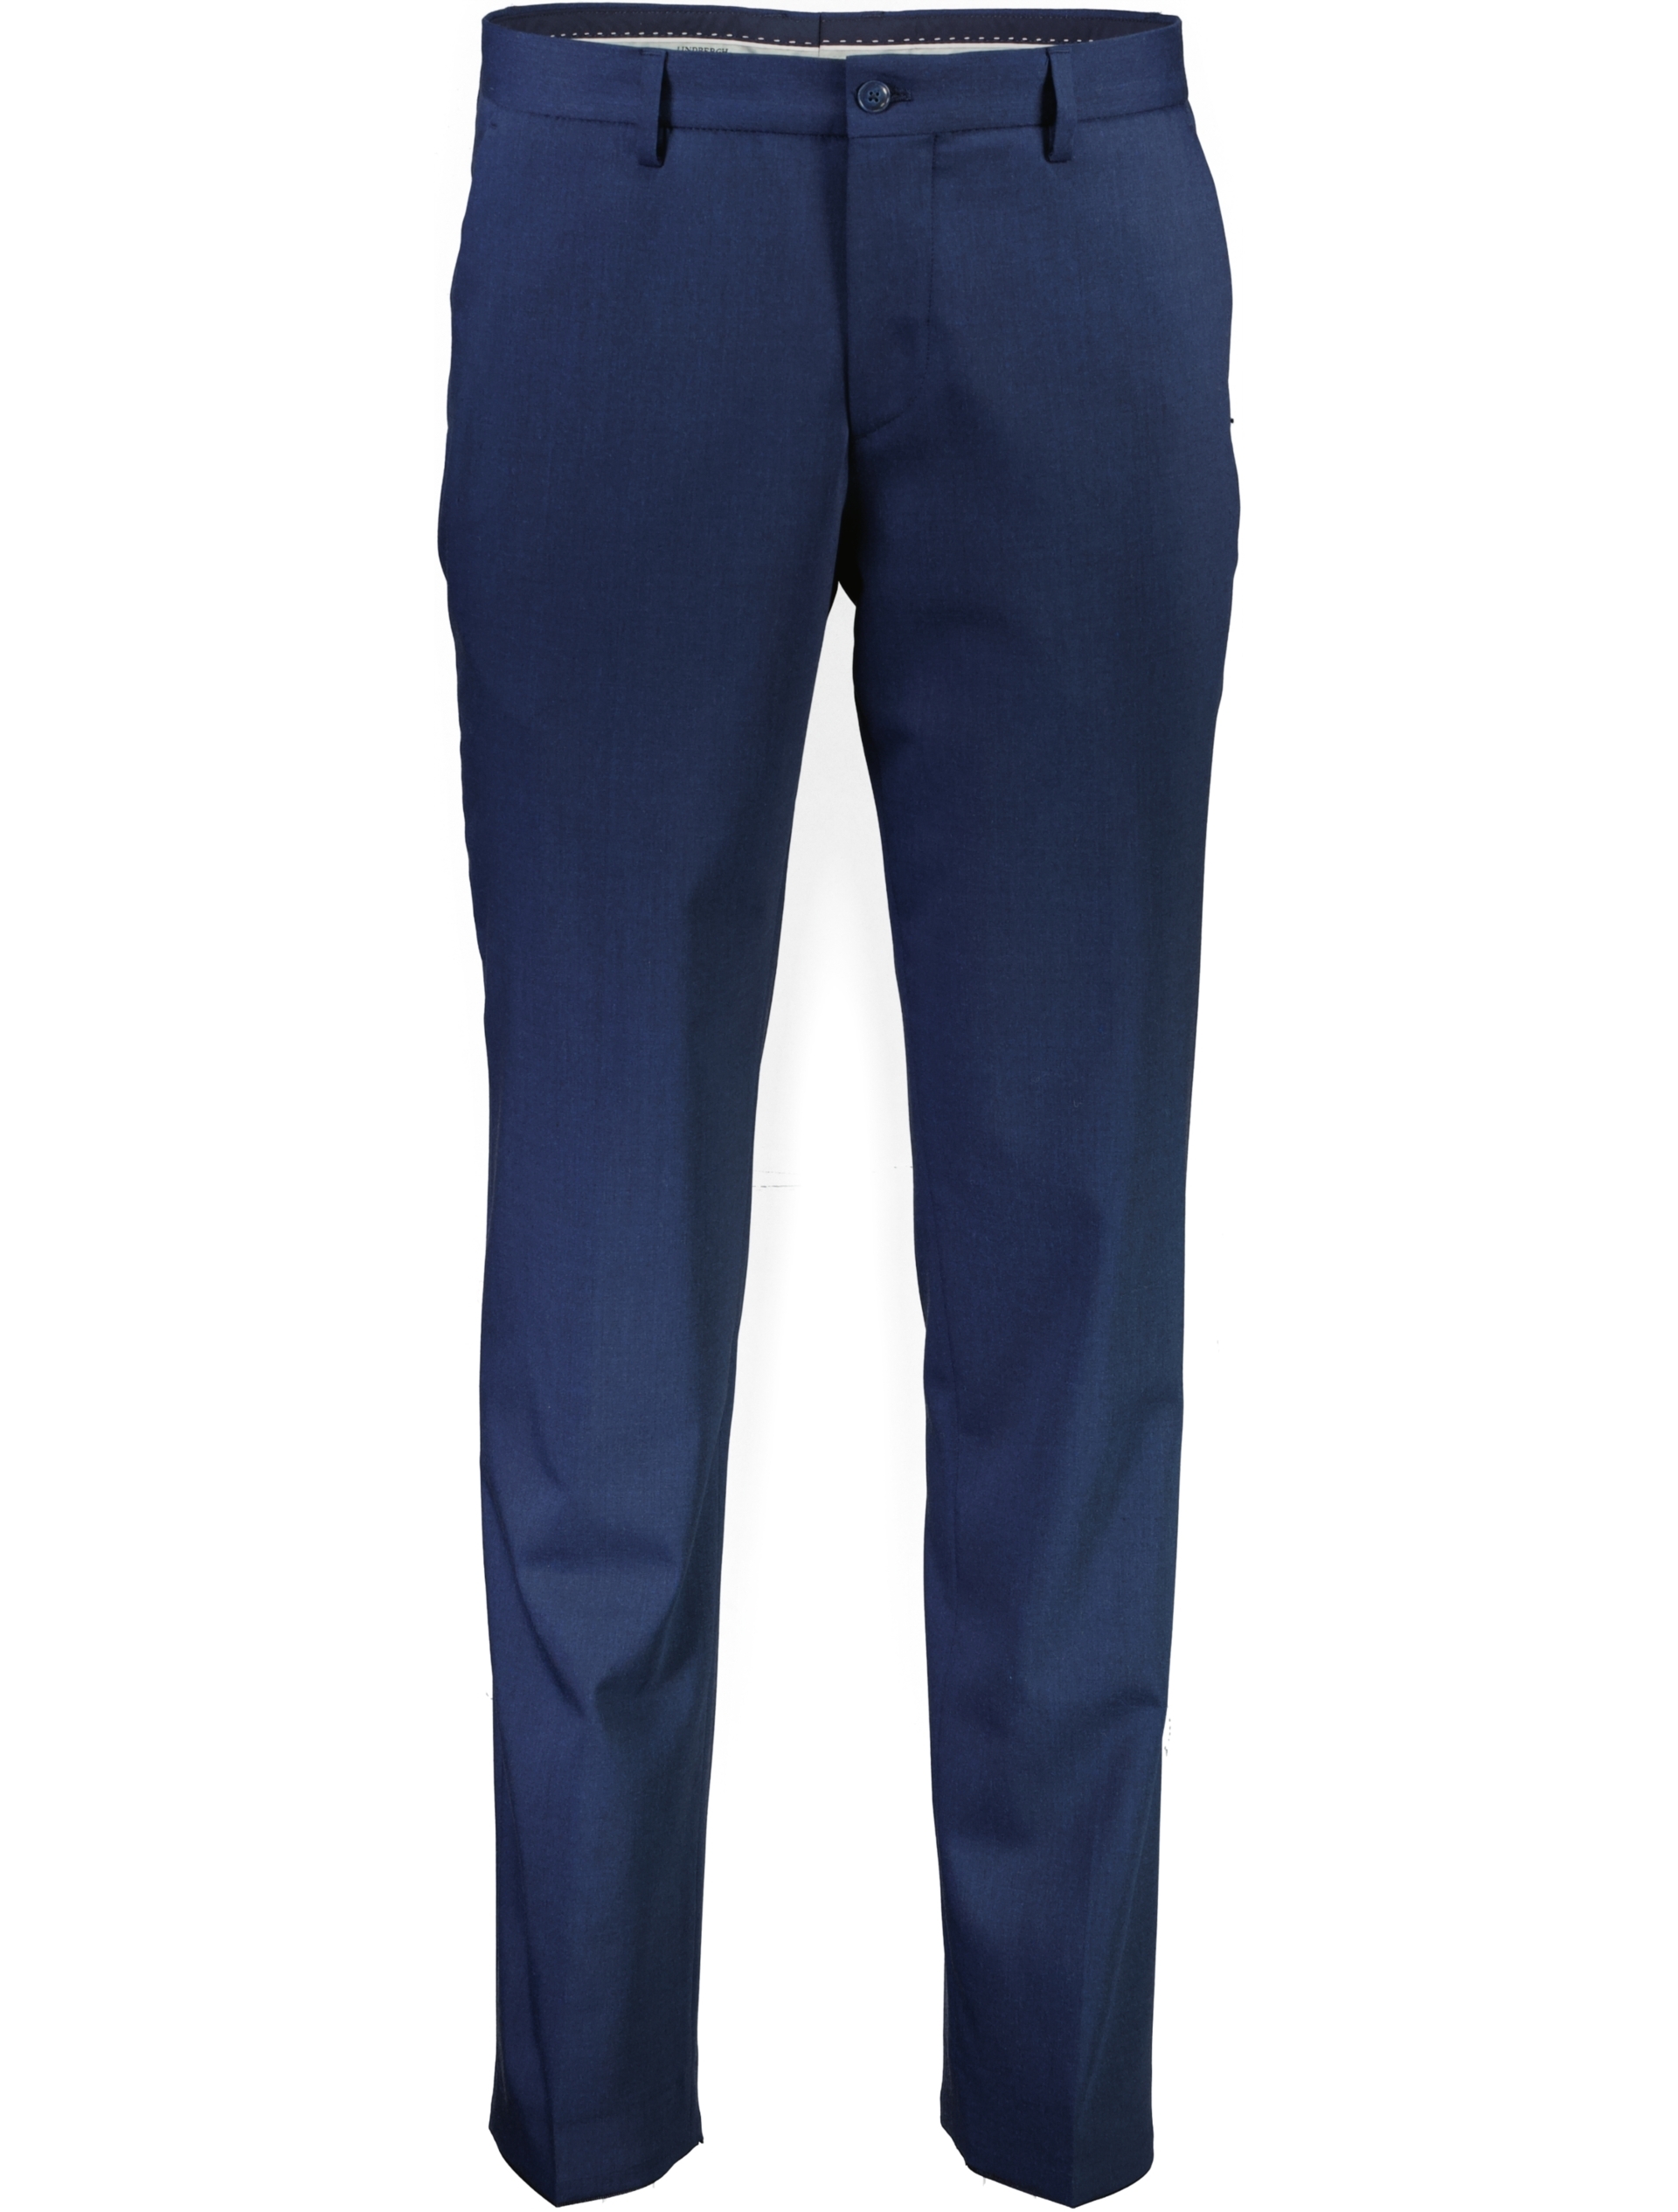 Lindbergh Pantalon blauw / mid navy mel